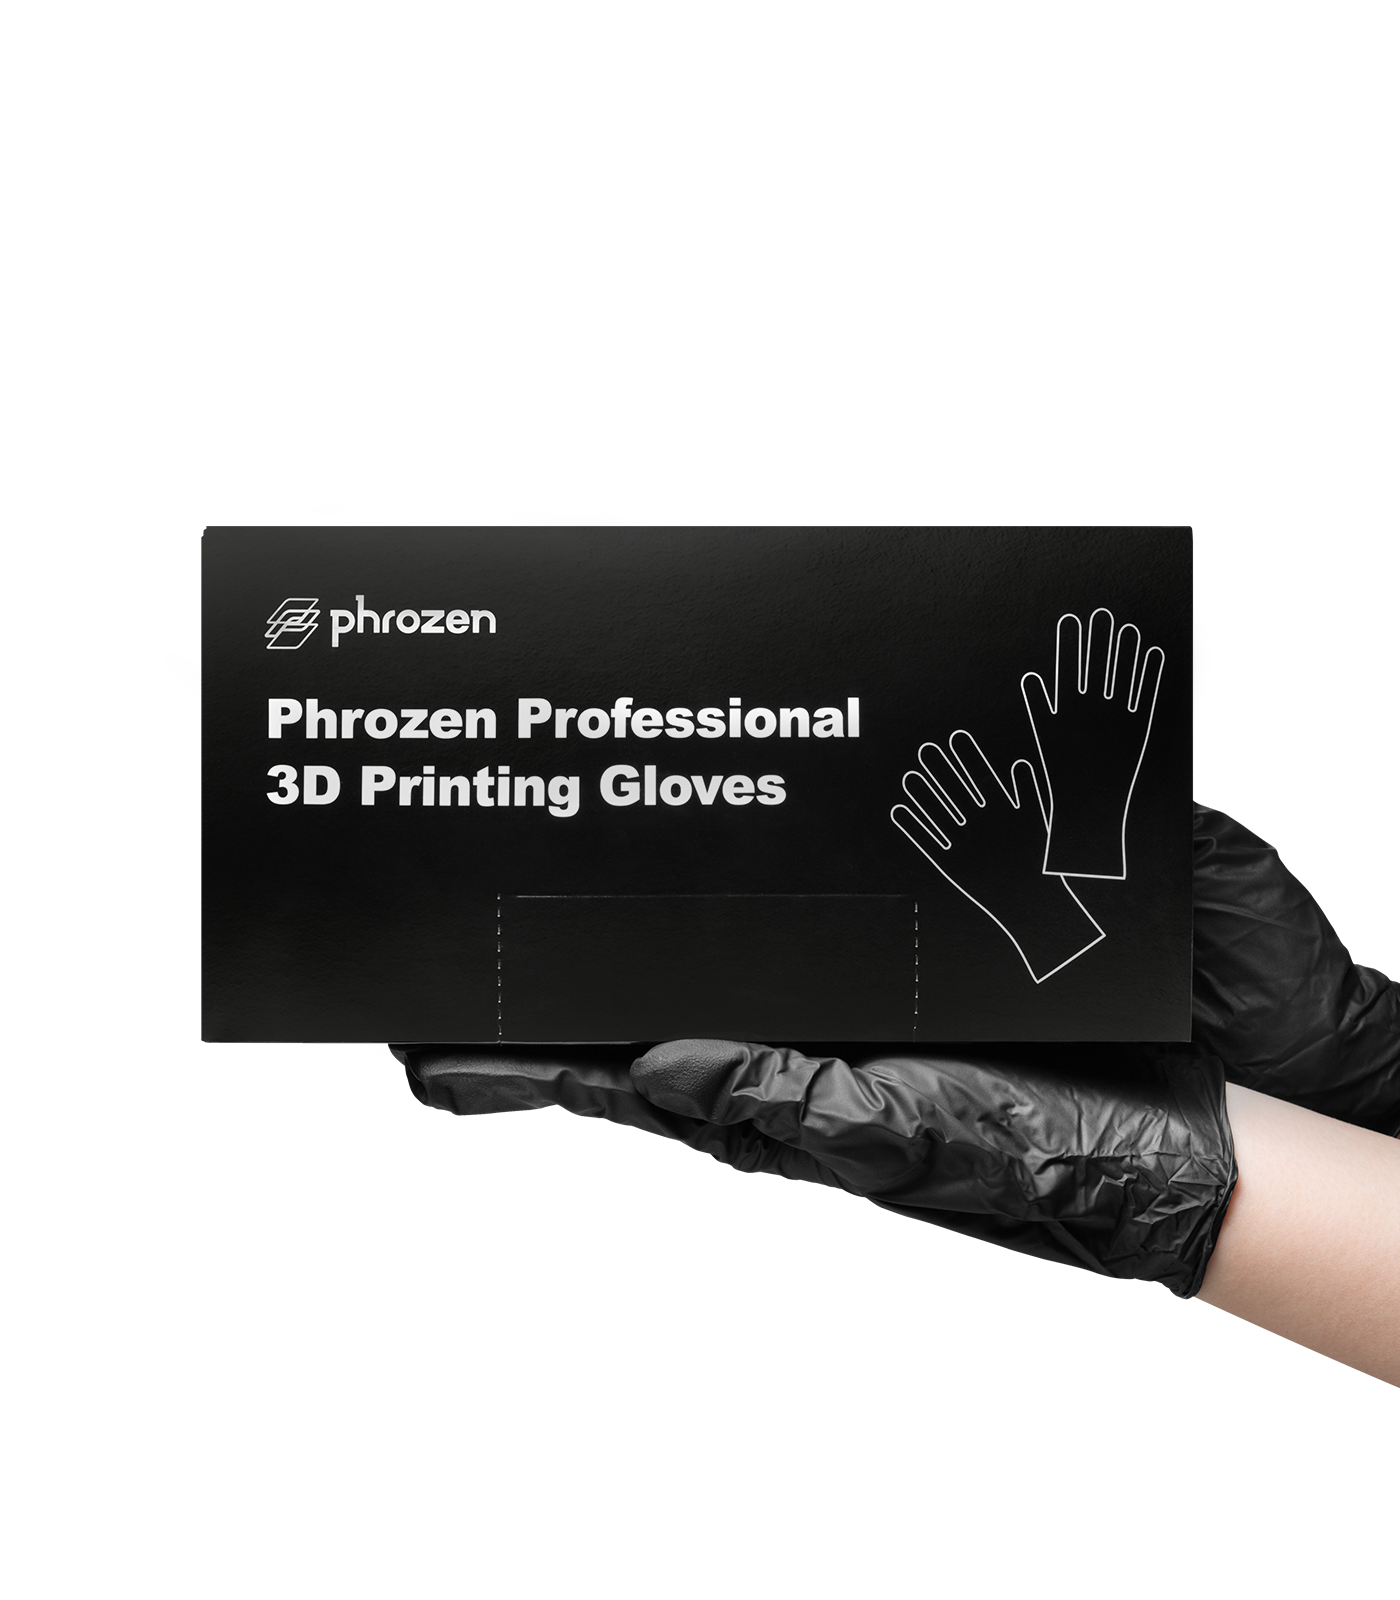 Phrozen Professional 3D Printing Gloves